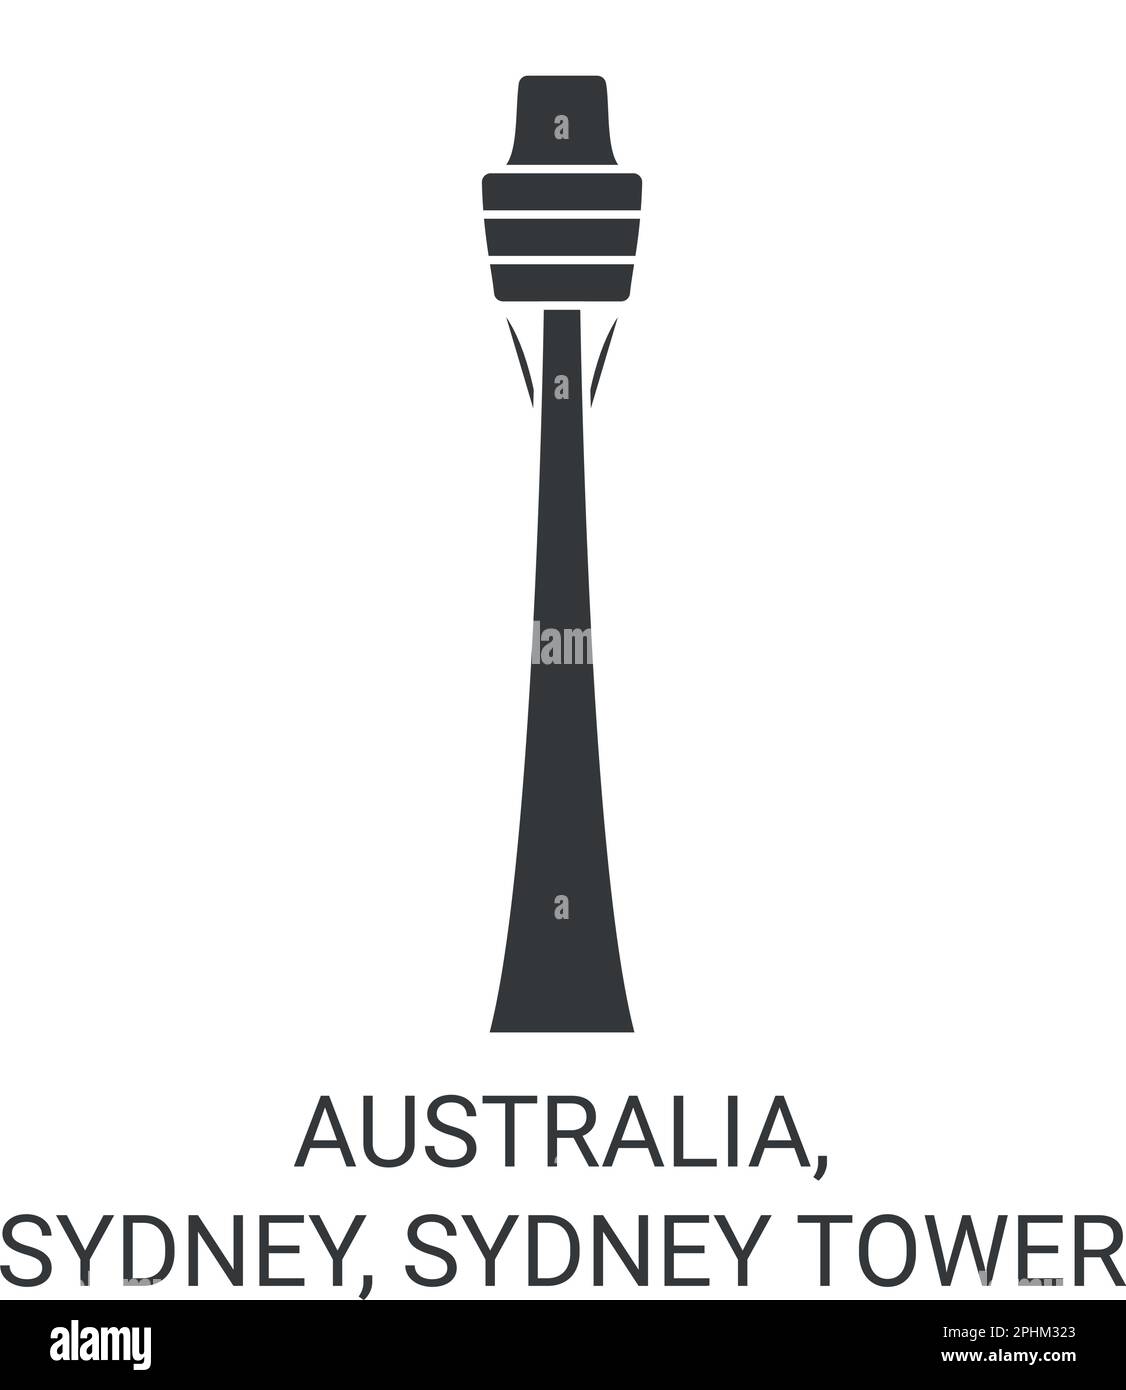 Vektorgrafik für Reisen in Australien, Sydney, Sydney Tower Stock Vektor